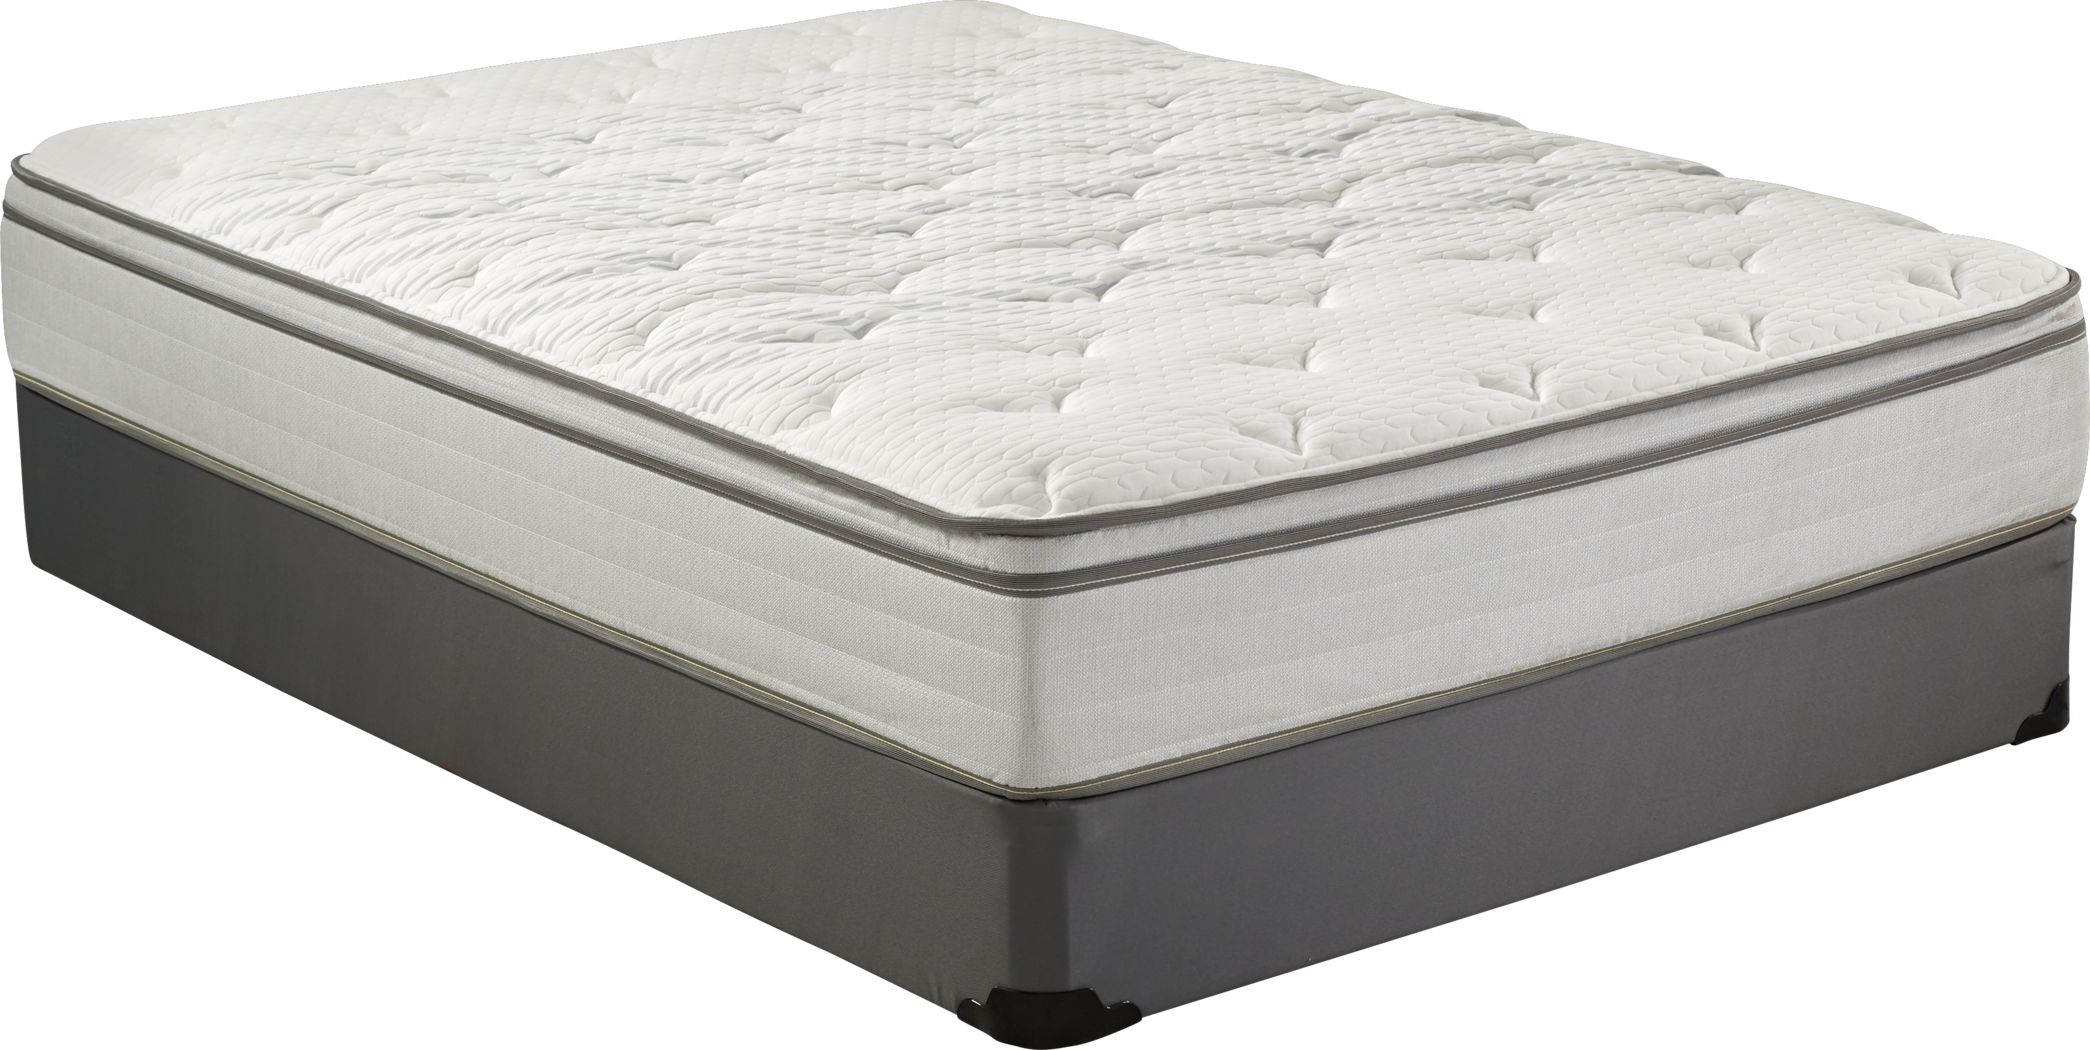 low cost twin mattress sets